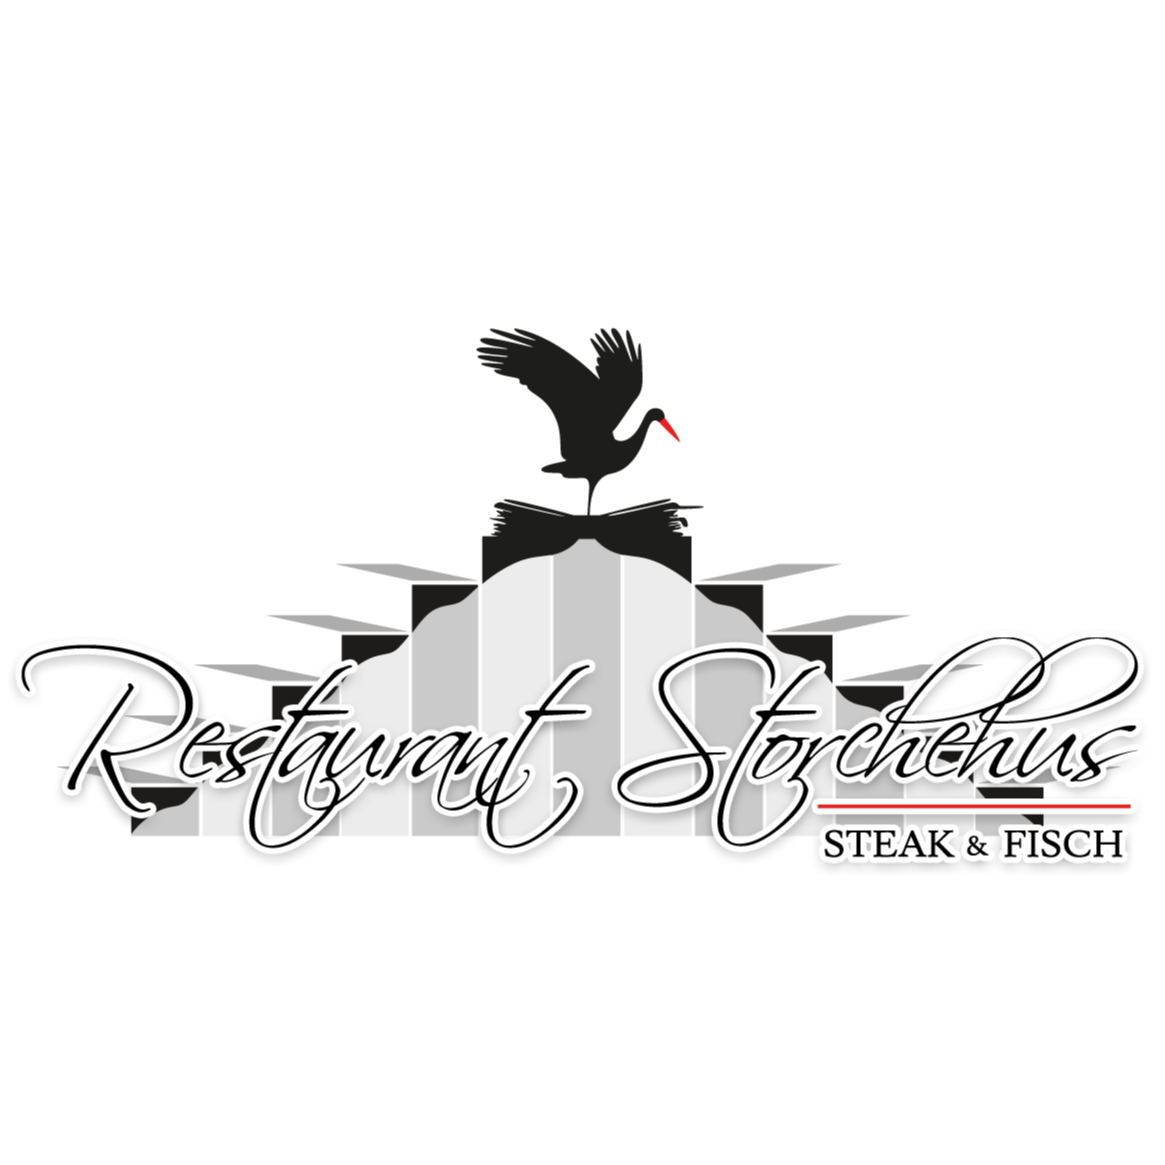 Logo Restaurant Storchehus